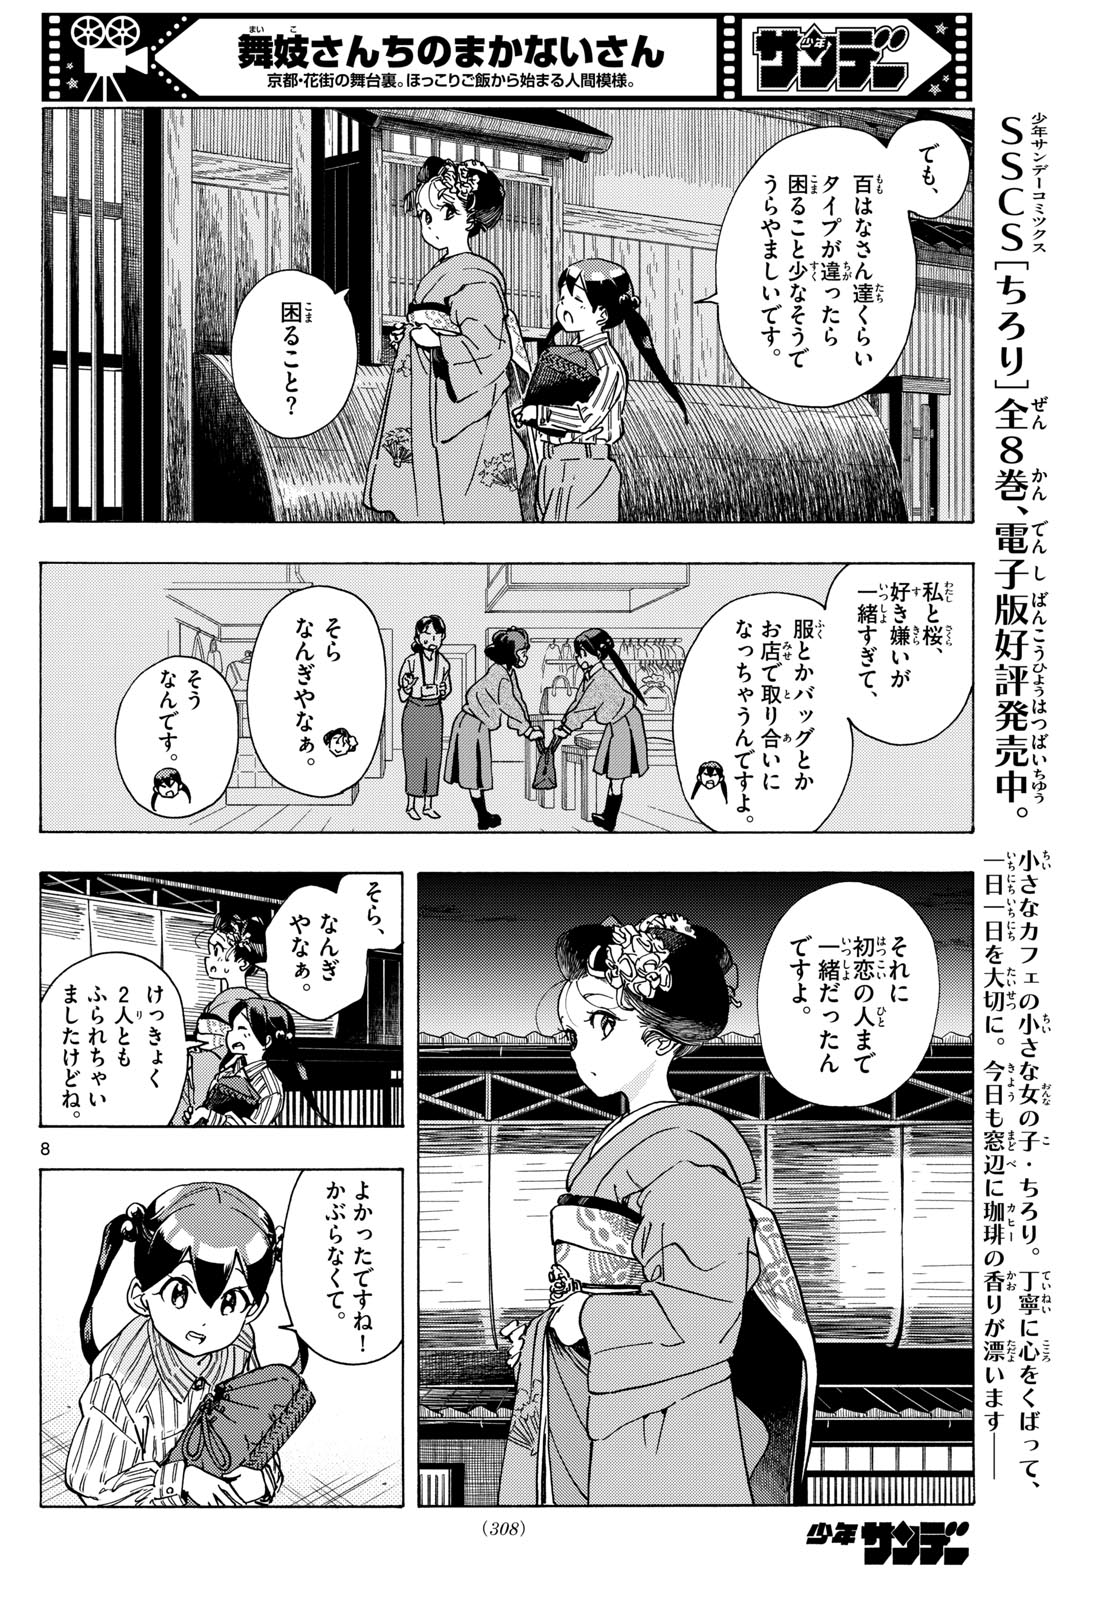 Maiko-san Chi no Makanai-san - Chapter 290 - Page 8